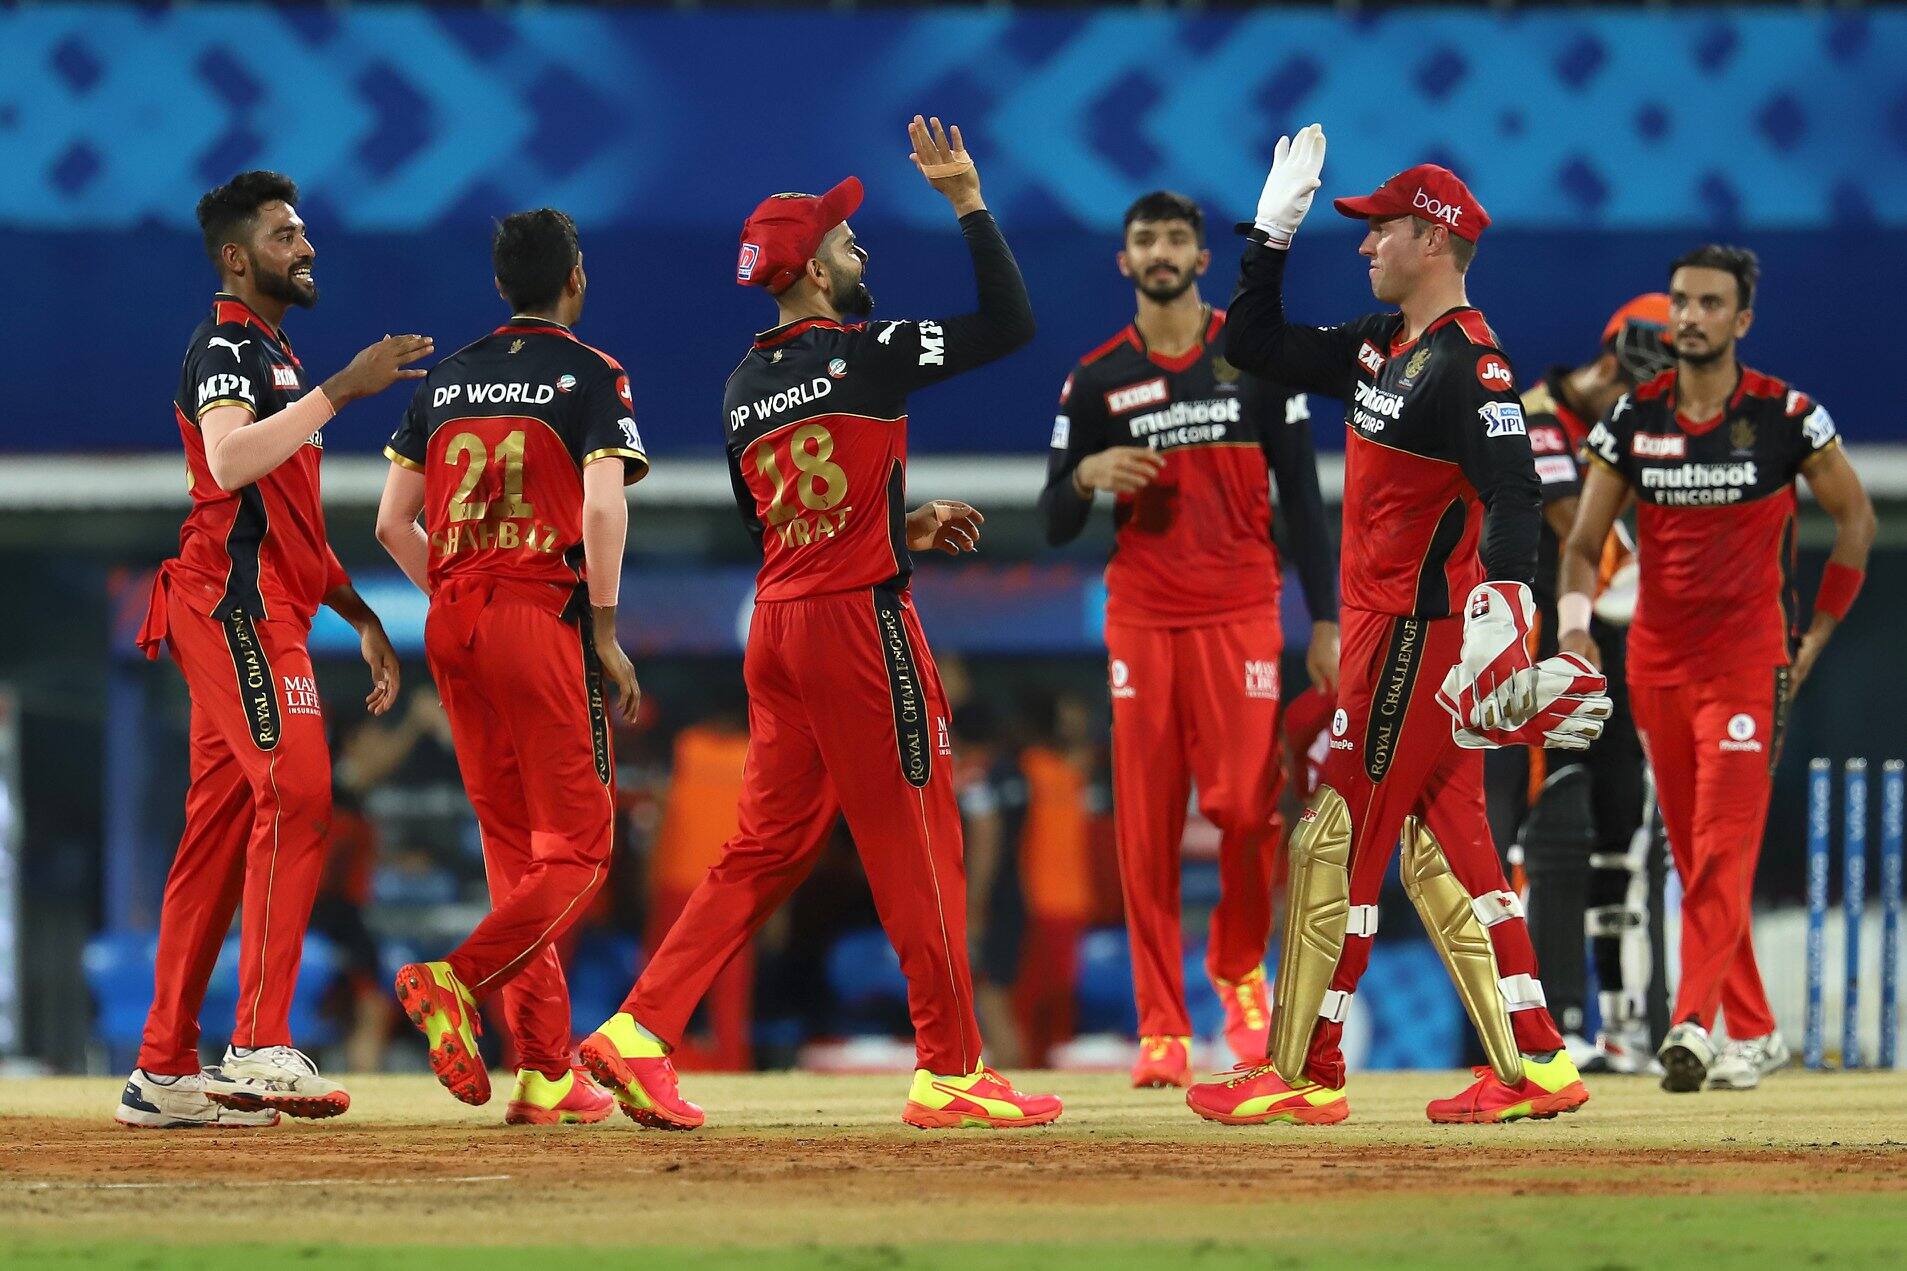 Royal Challengers Bangalore captain Virat Kohli (left) and wicketkeeper AB de Villiers celebrate a dismissal against Sunrisers Hyderabad in Chennai. (Photo: IPL)